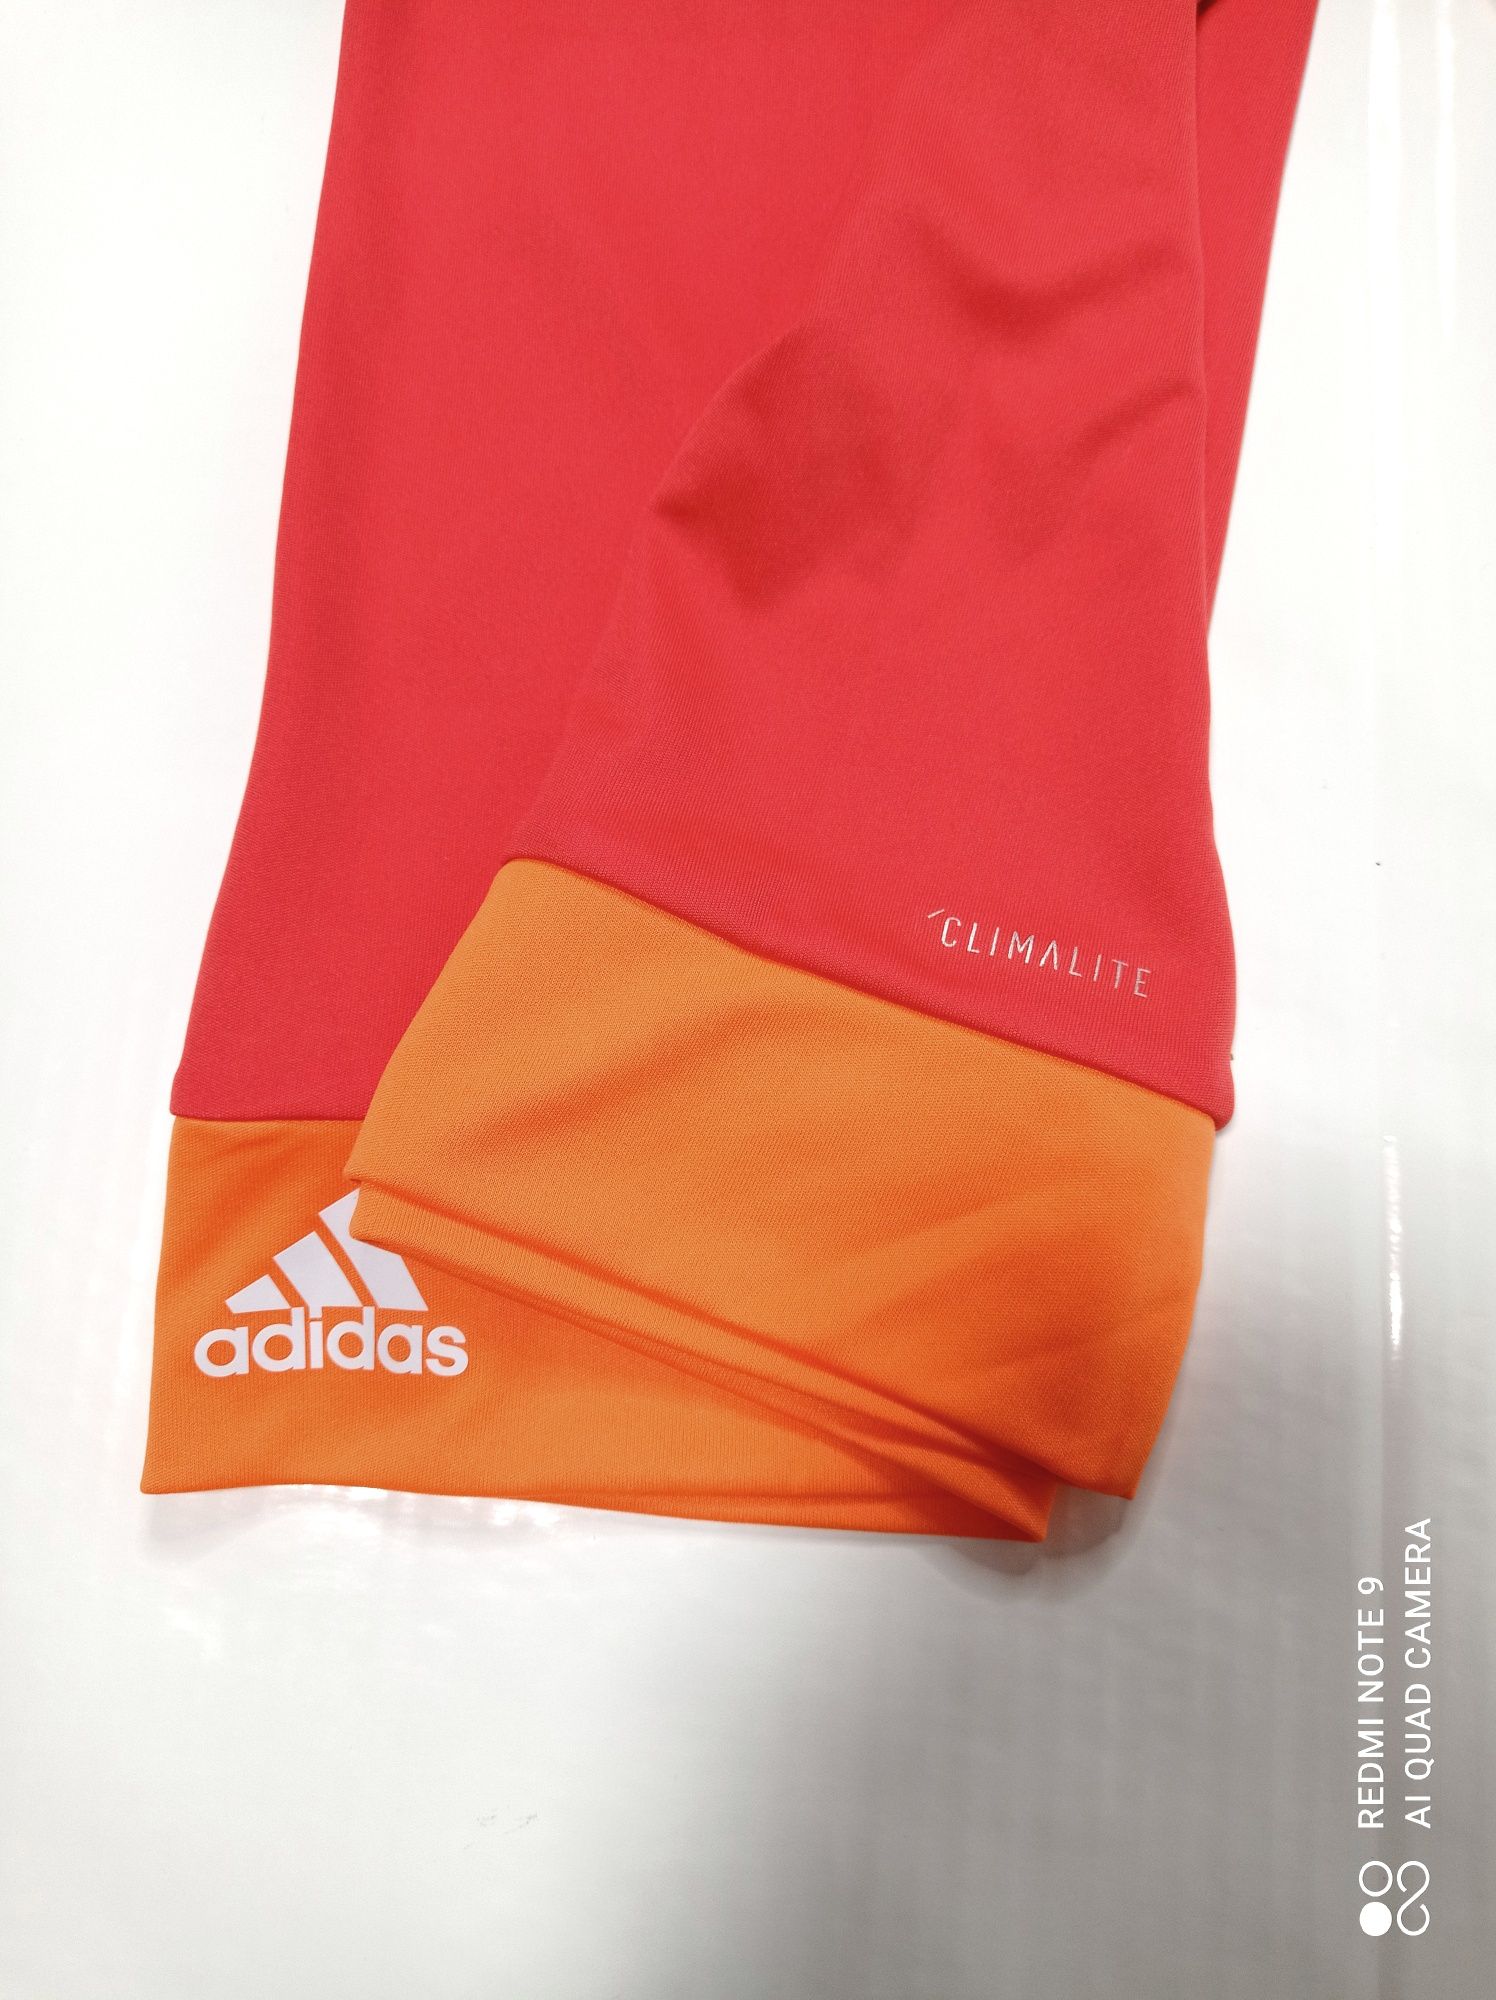 Футболка Adidas 11-12 лет 152 см